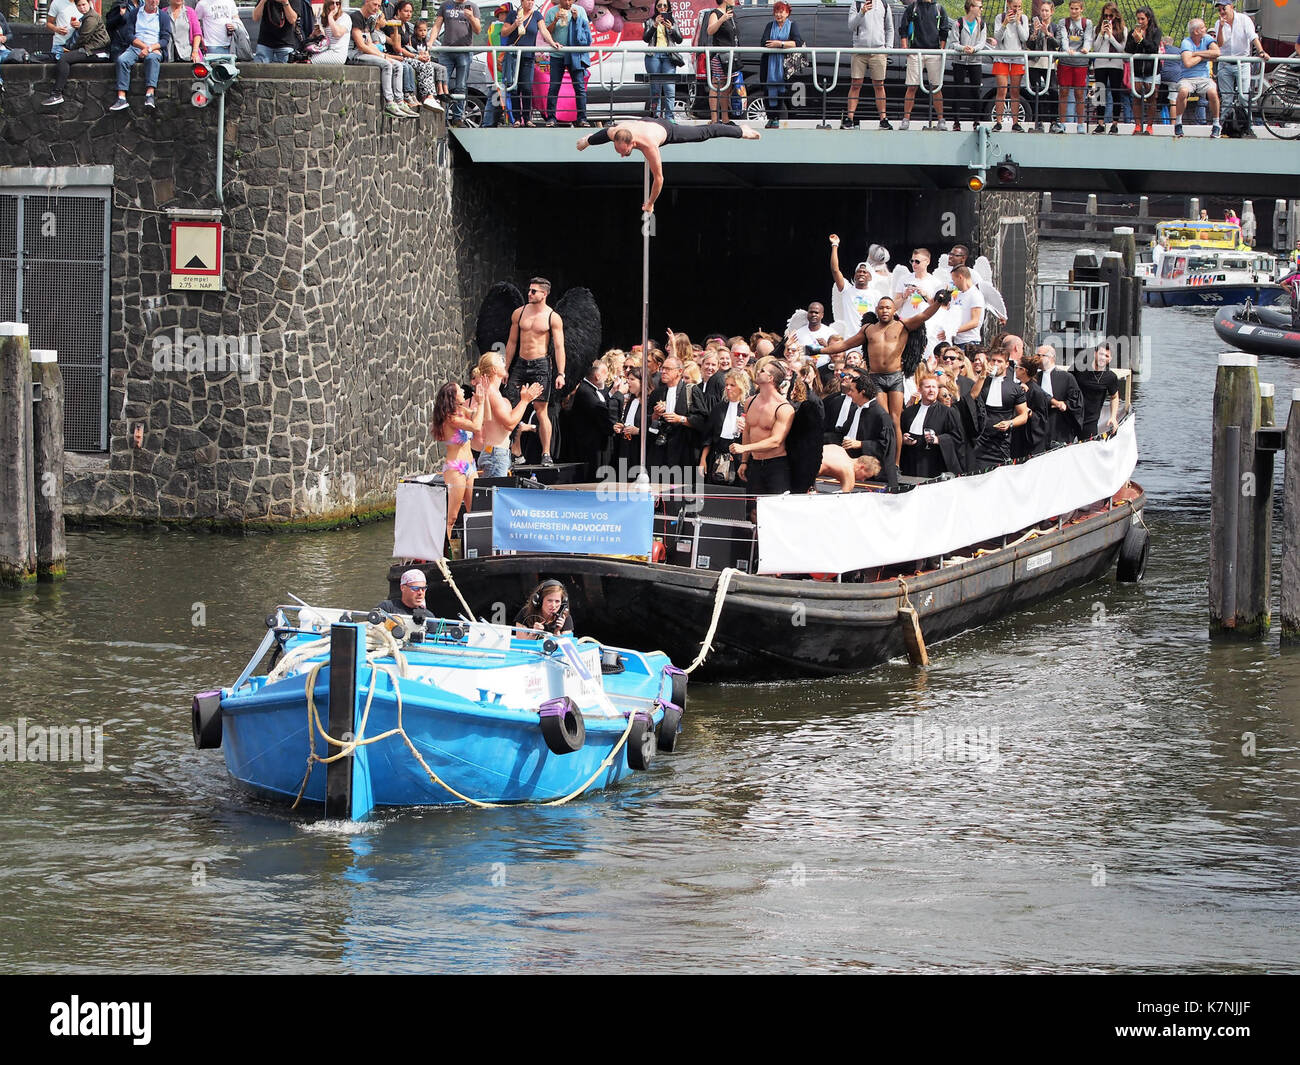 Barco advocaten boot, Canal Parade Amsterdam 2017 Foto 1 Foto de stock